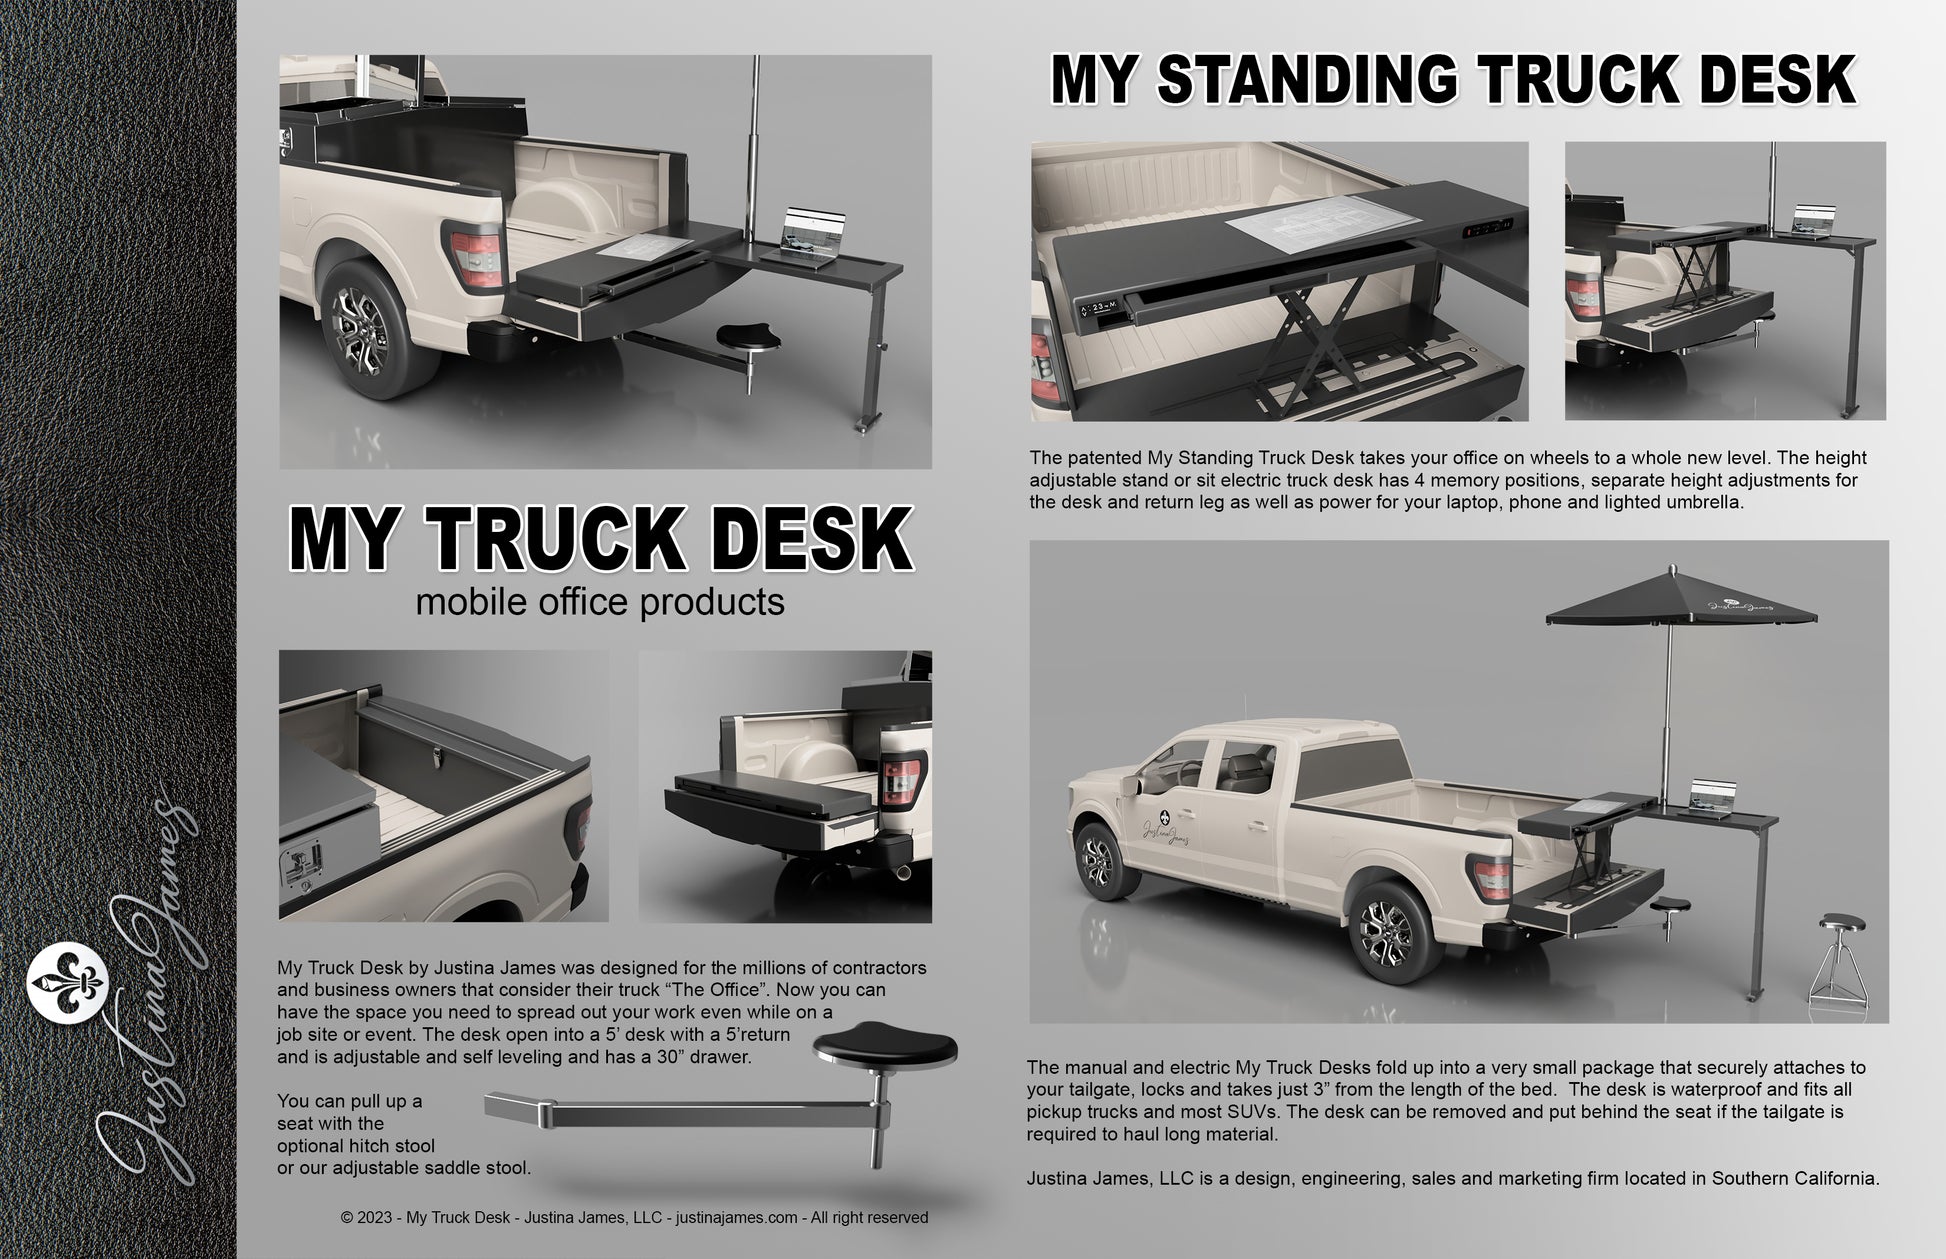 The Original My Truck Desk